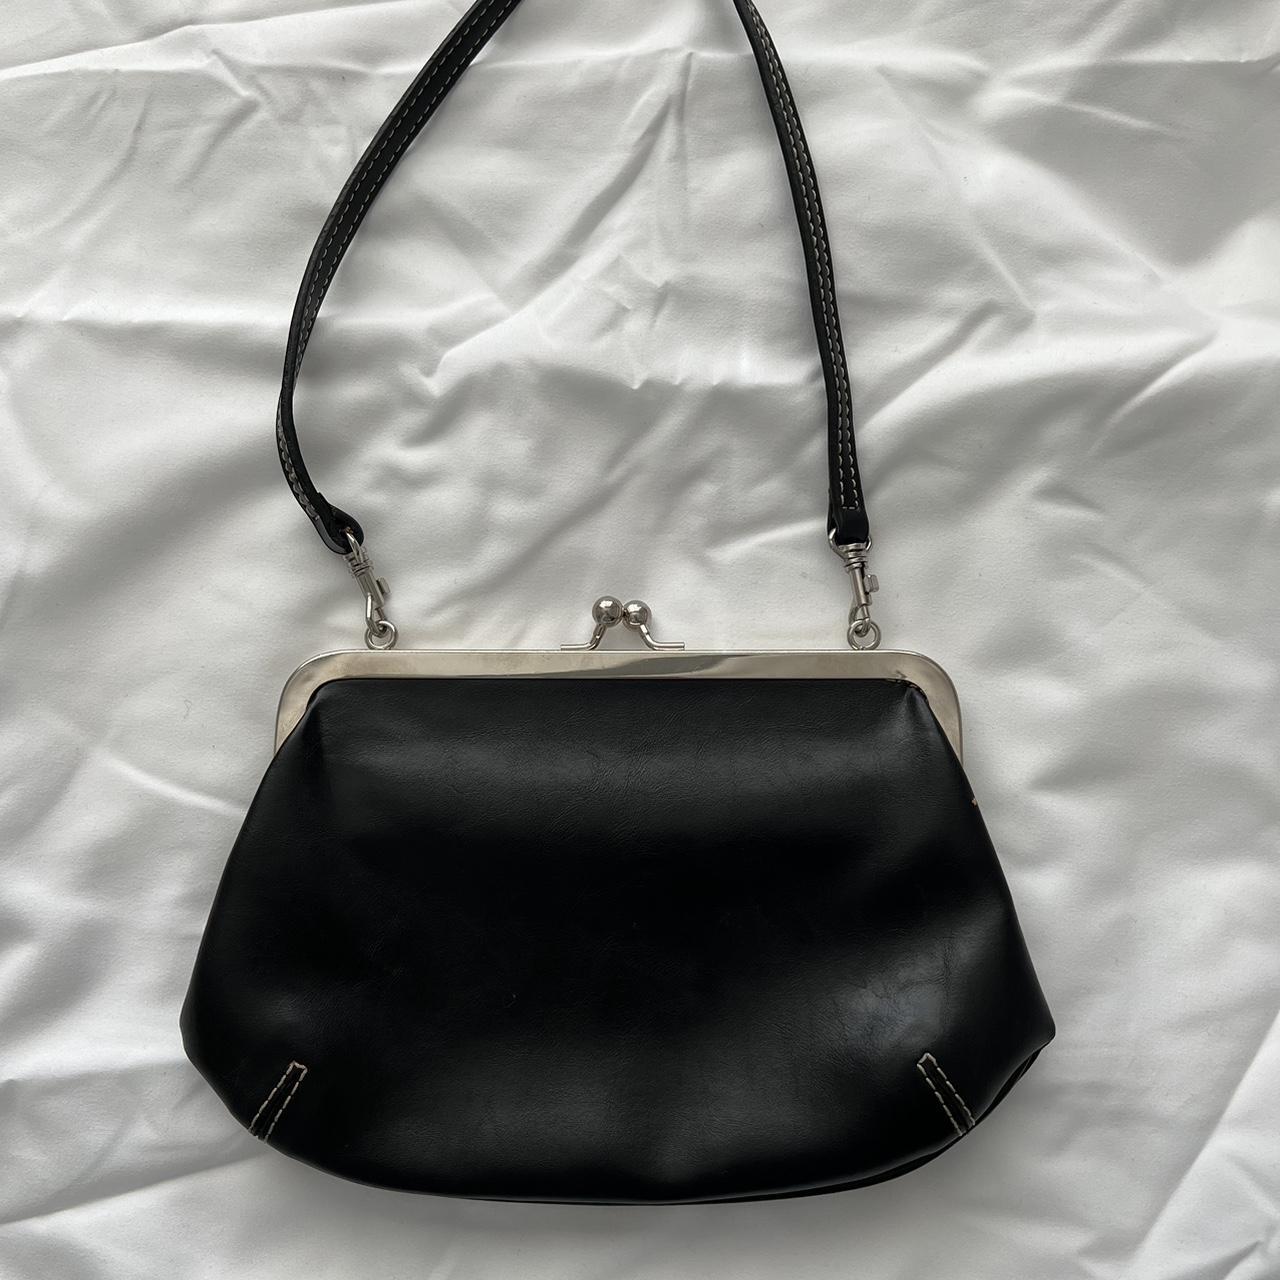 Small Backpacks | Designer Mini Backpack Bags – Pretty Pokets